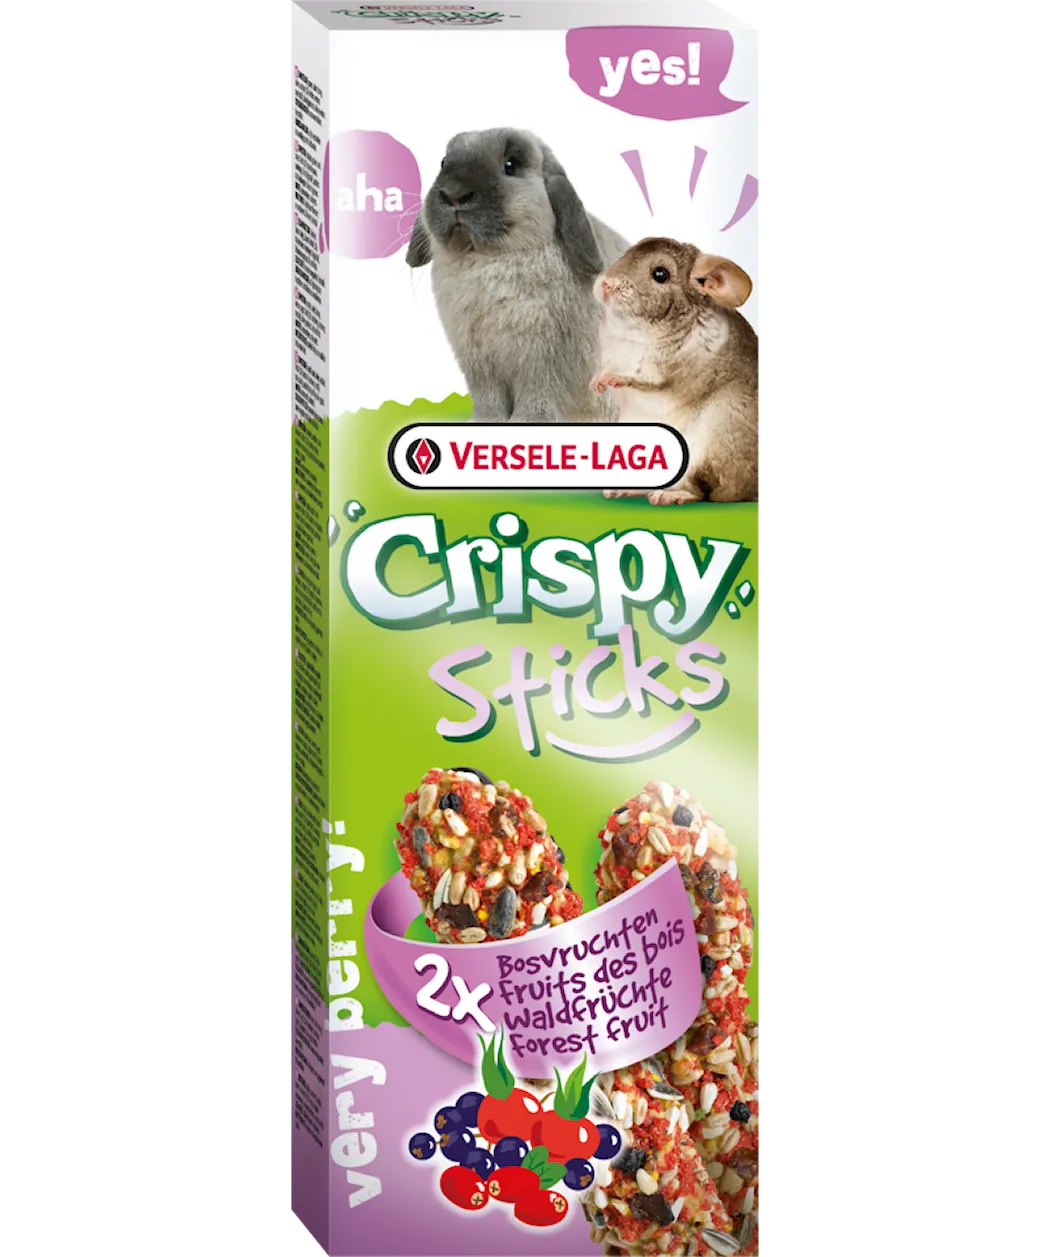 CrispySticks Rabbits-Chinchillas Forest Fruit 2-pack